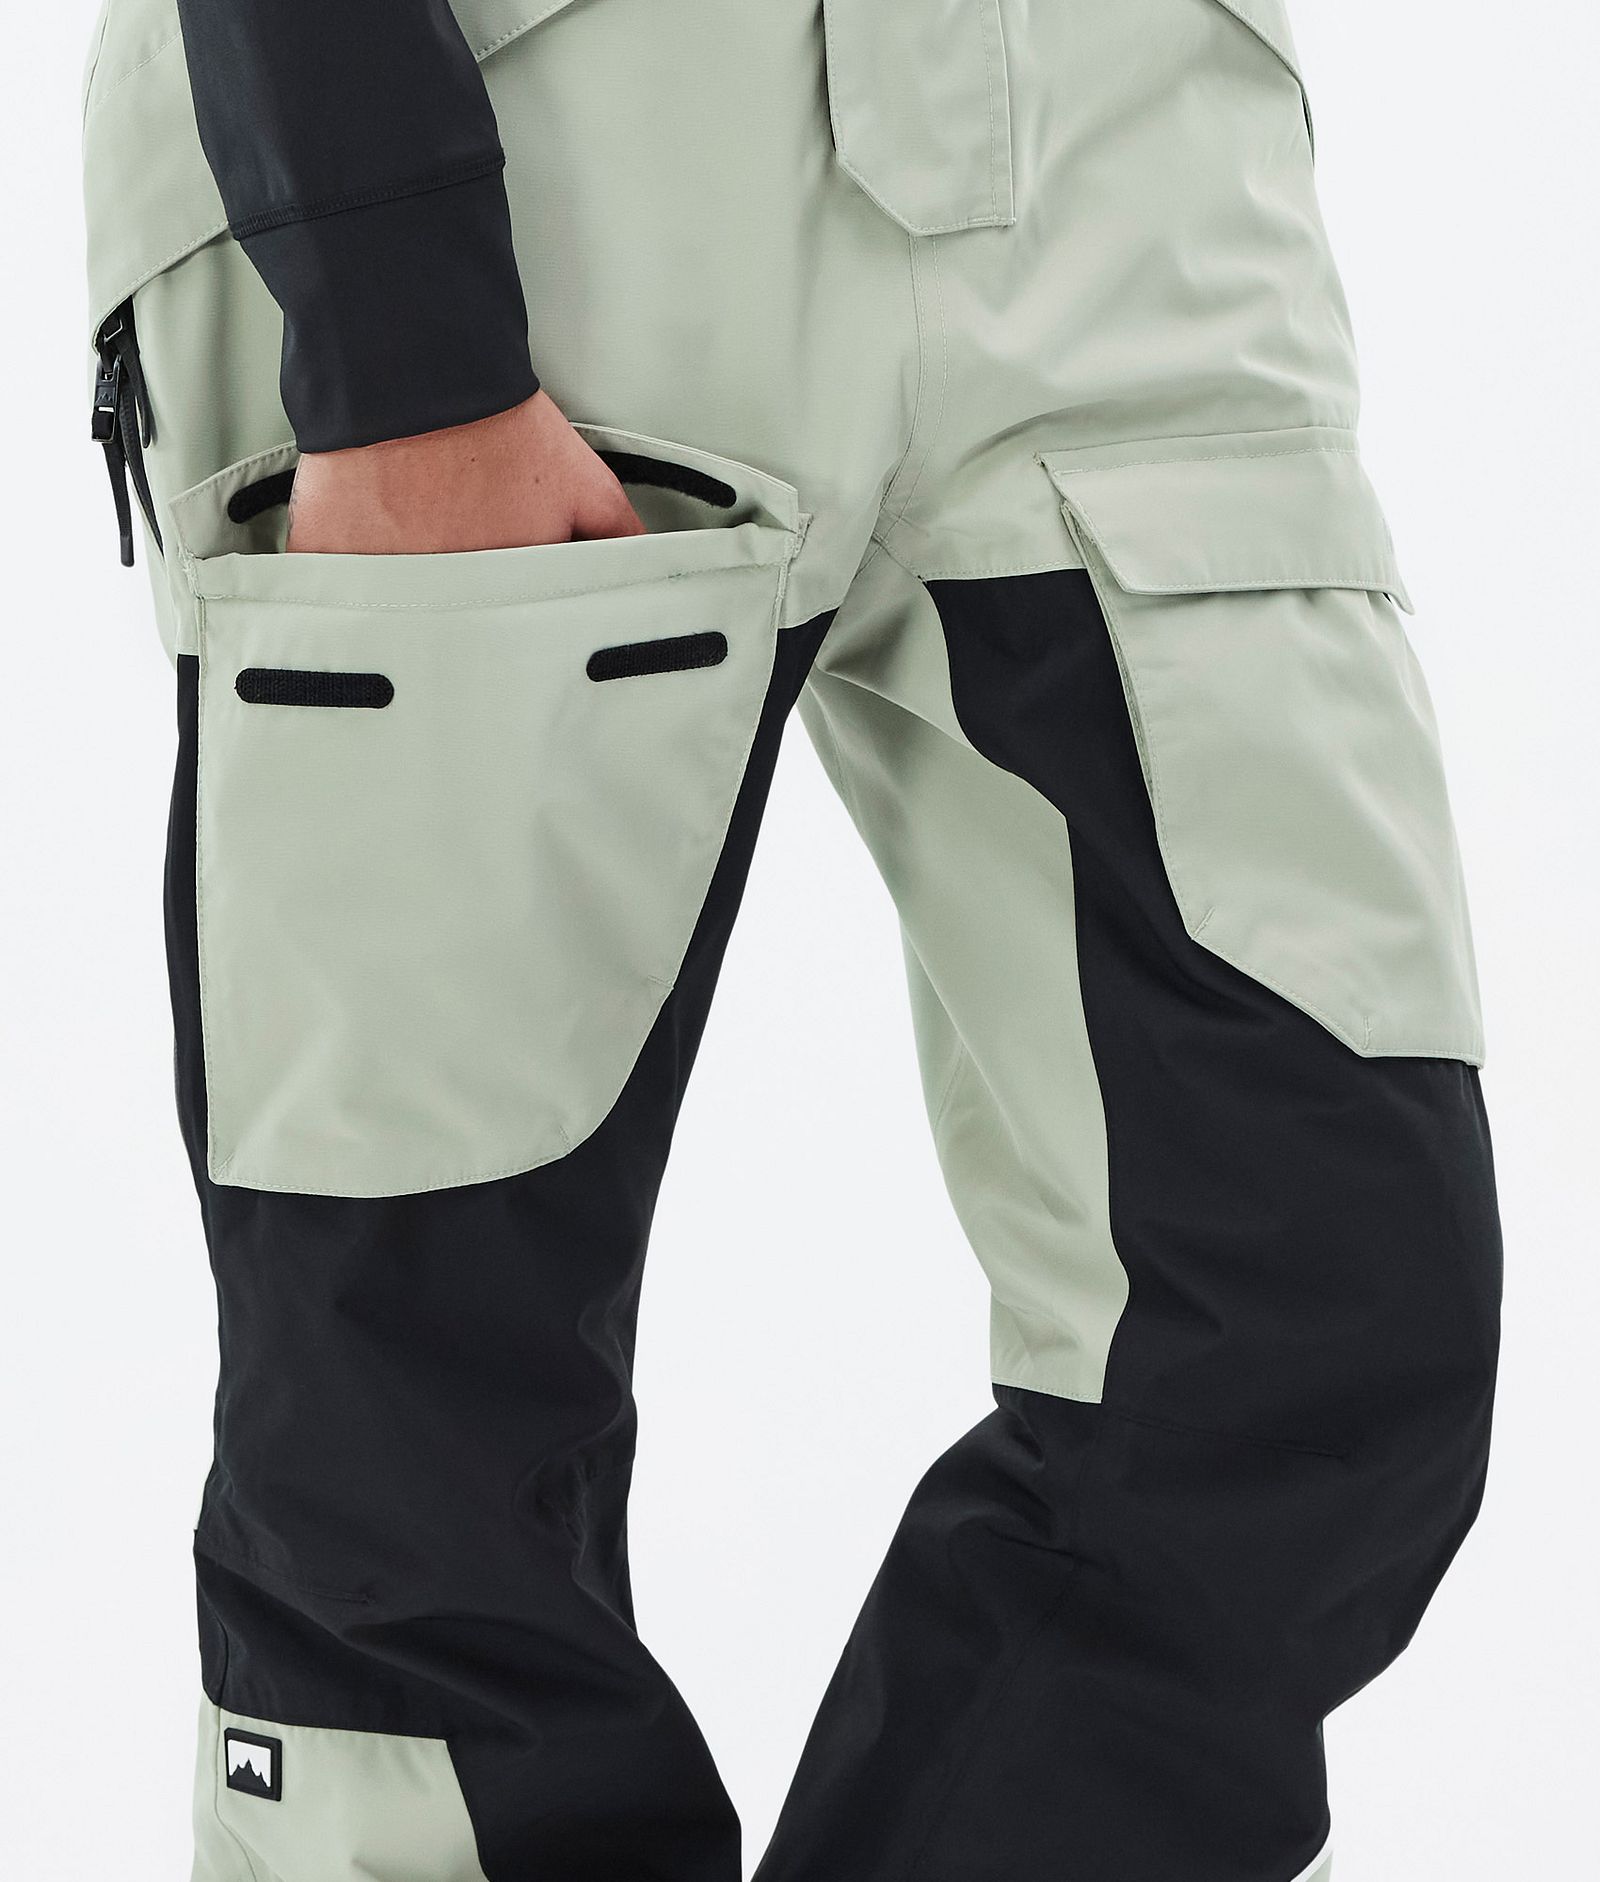 Montec Fawk W Snowboard Pants Women Soft Green/Black